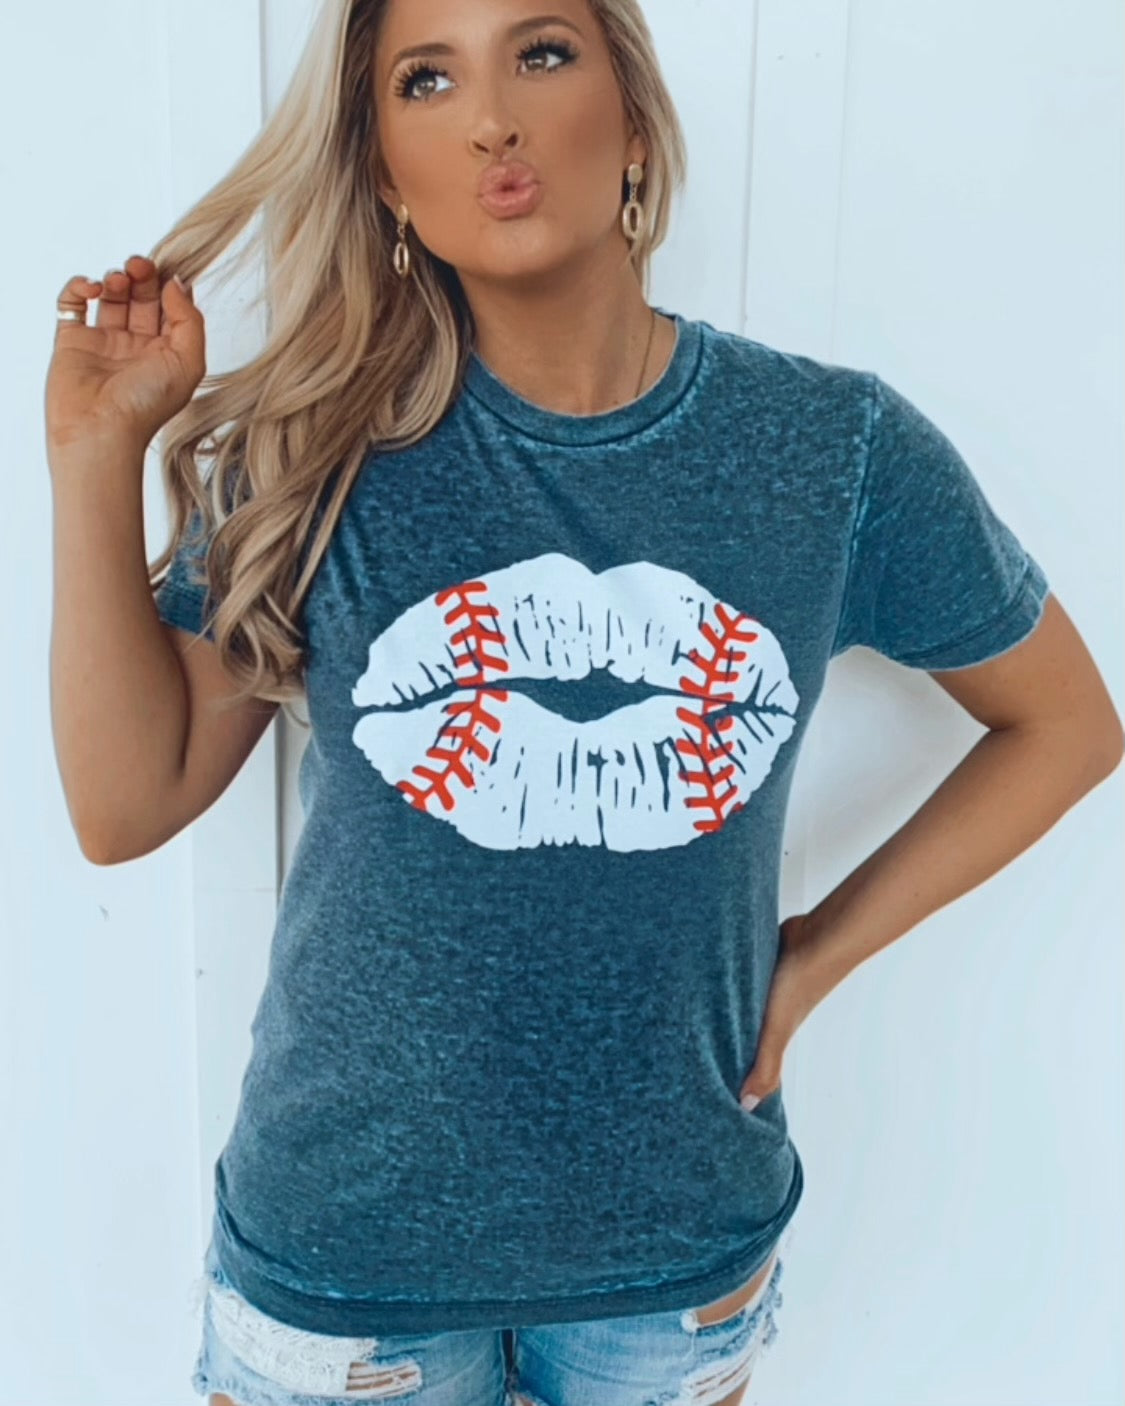 cute baseball shirts